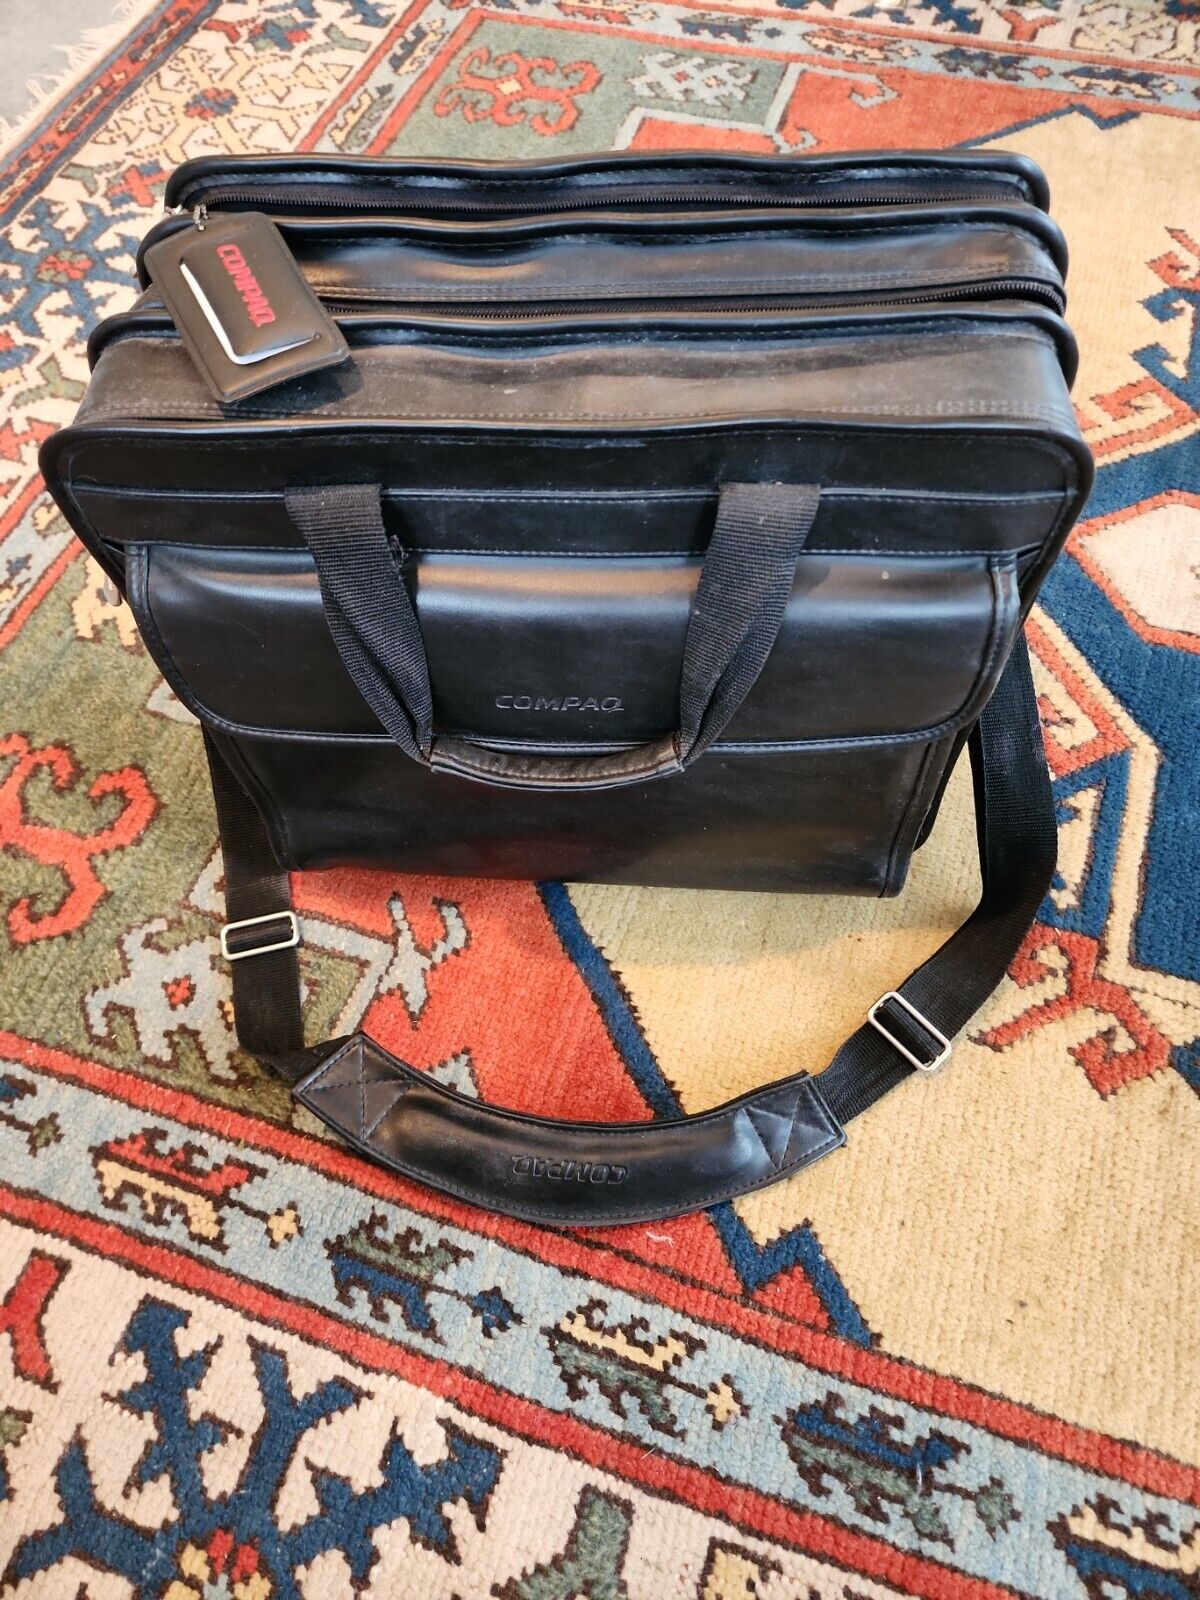 Leather Black Compaq Computer Laptop Shoulder Bag Satchel